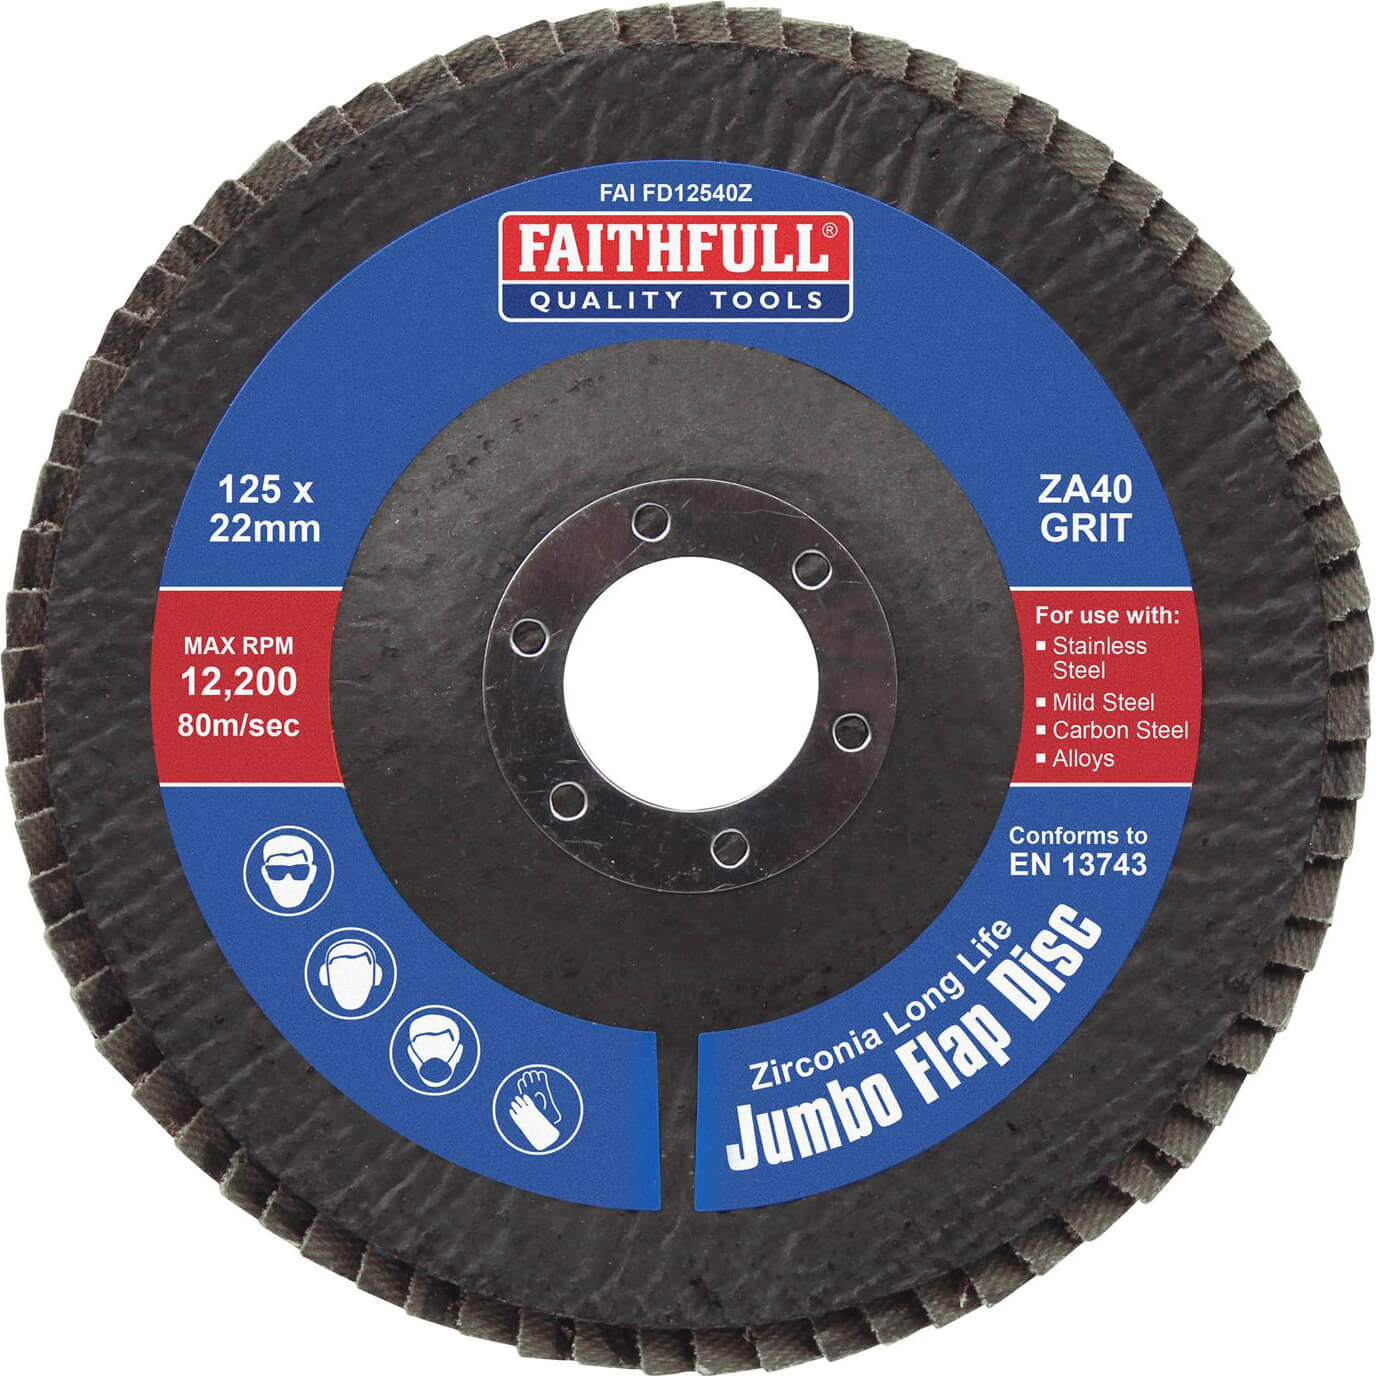 Photos - Cutting Disc Faithfull Zirconia Abrasive Jumbo Flap Disc 125mm 40g Pack of 1 FAIFD12540 